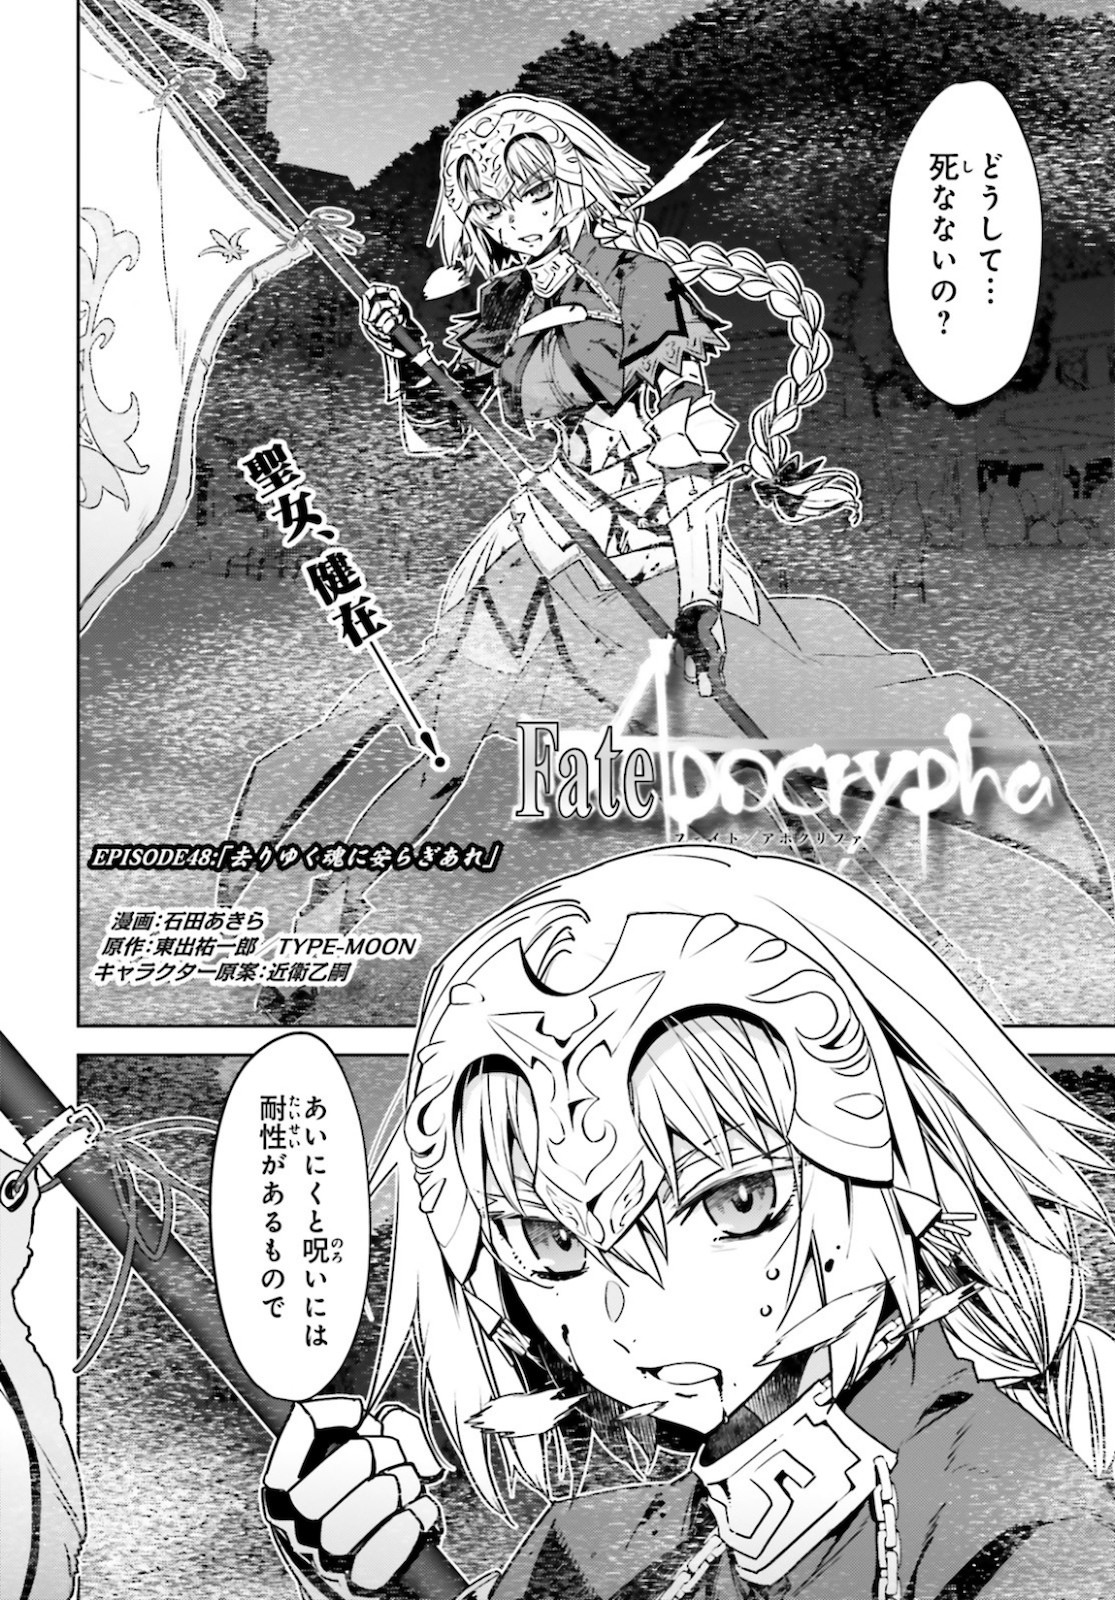 Fate Apocrypha Chapter 48 Page 1 Raw Sen Manga